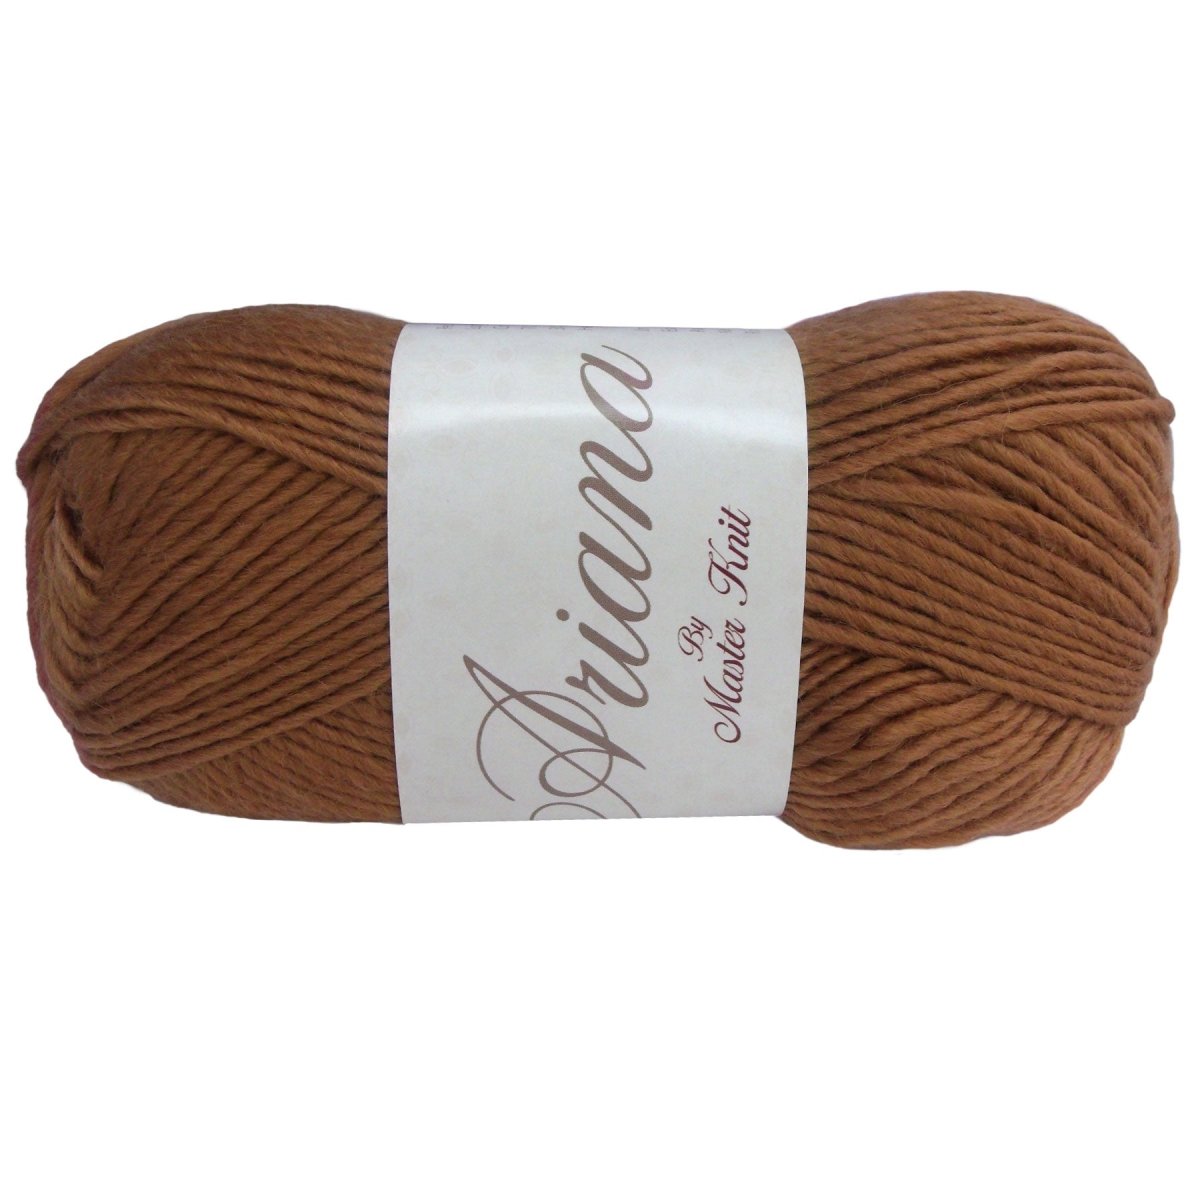 ARIANA - Aran - Crochetstores9510-199